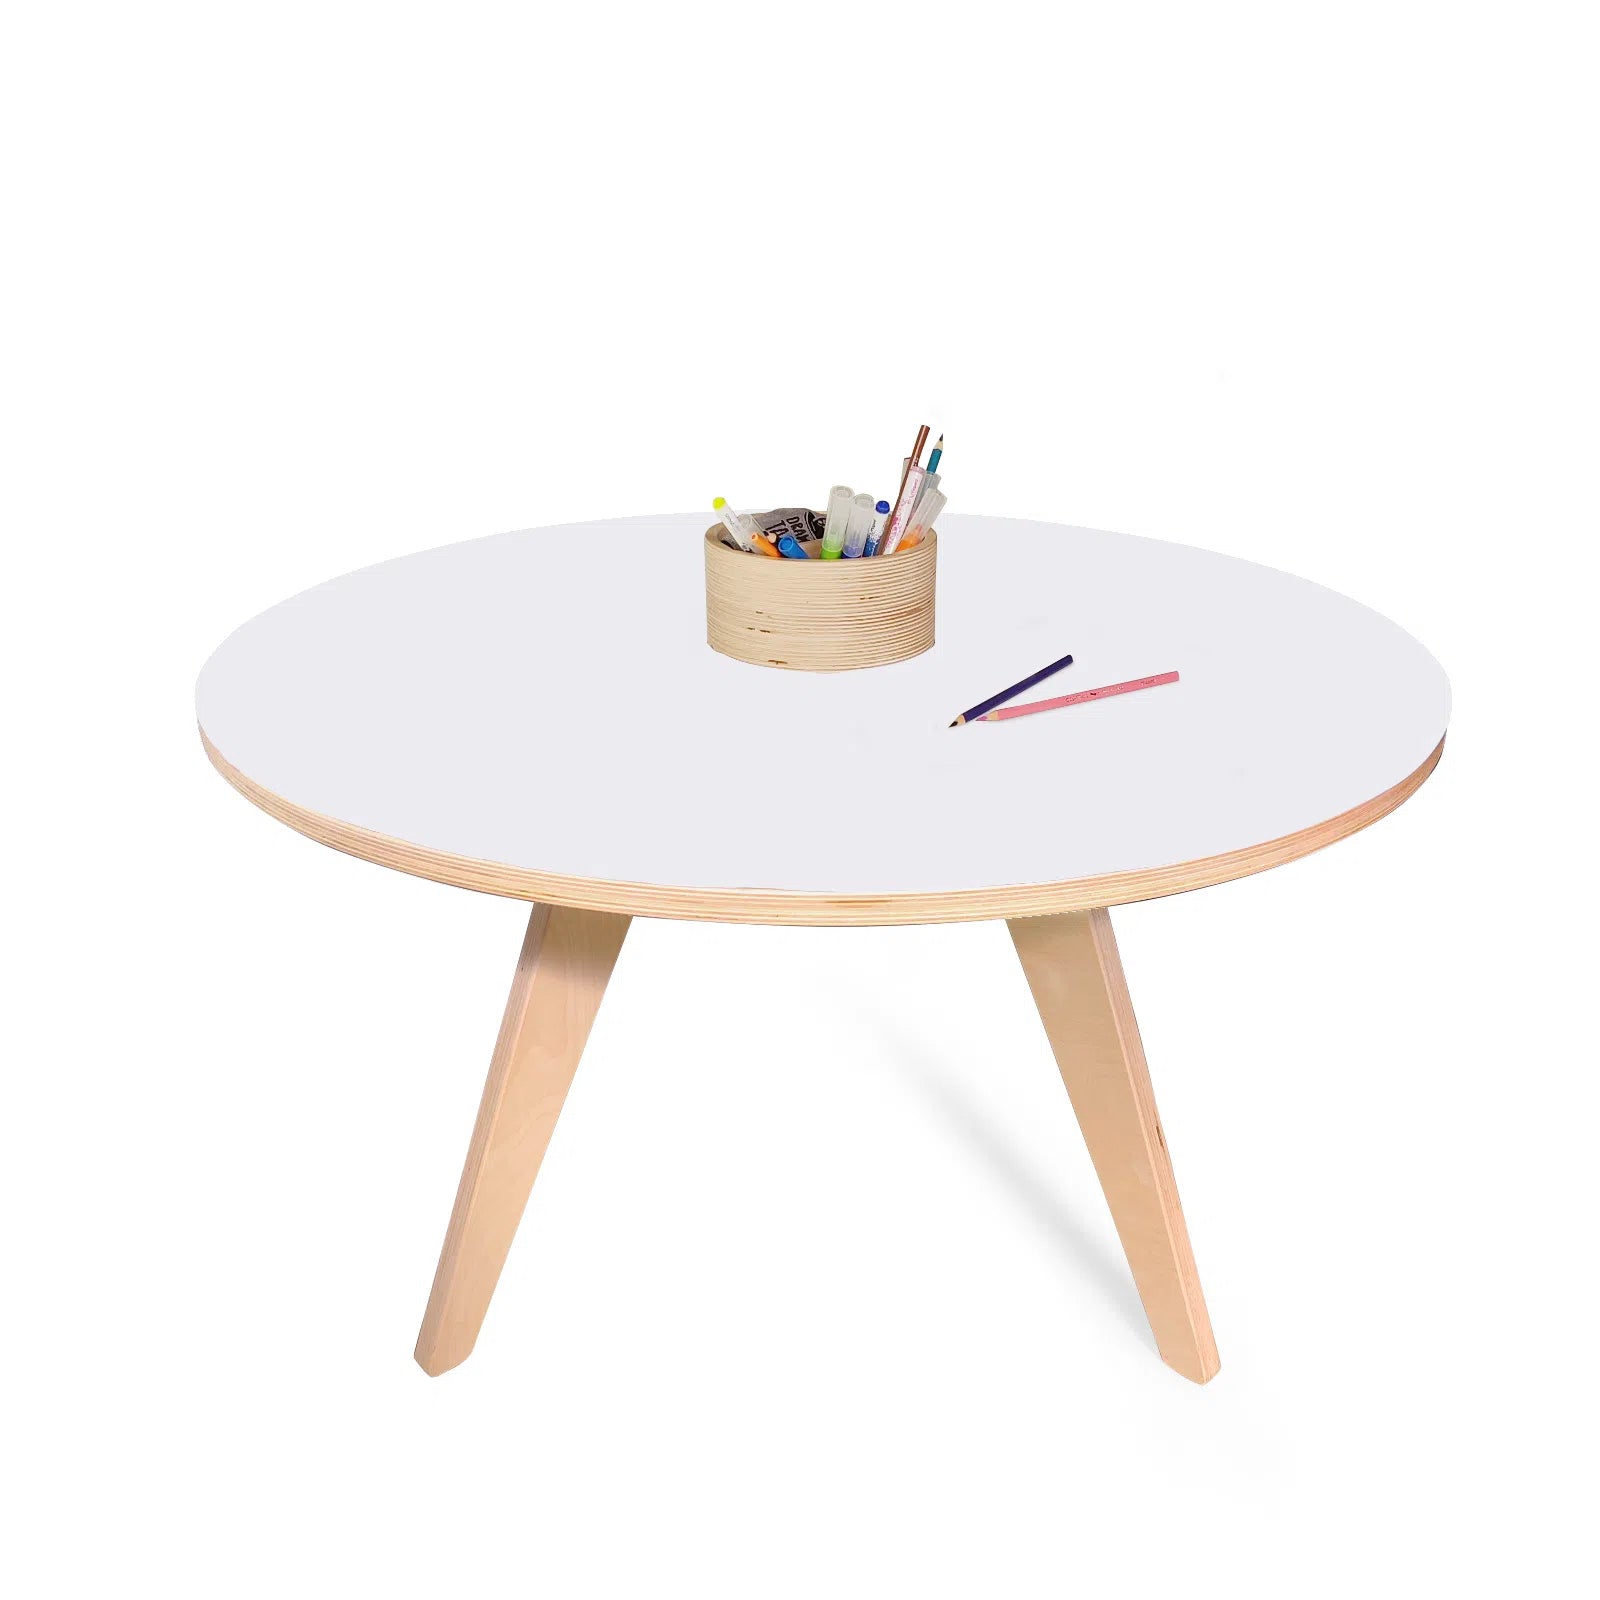 Table à dessiner Drawin'table Home Edition (diamètre 70